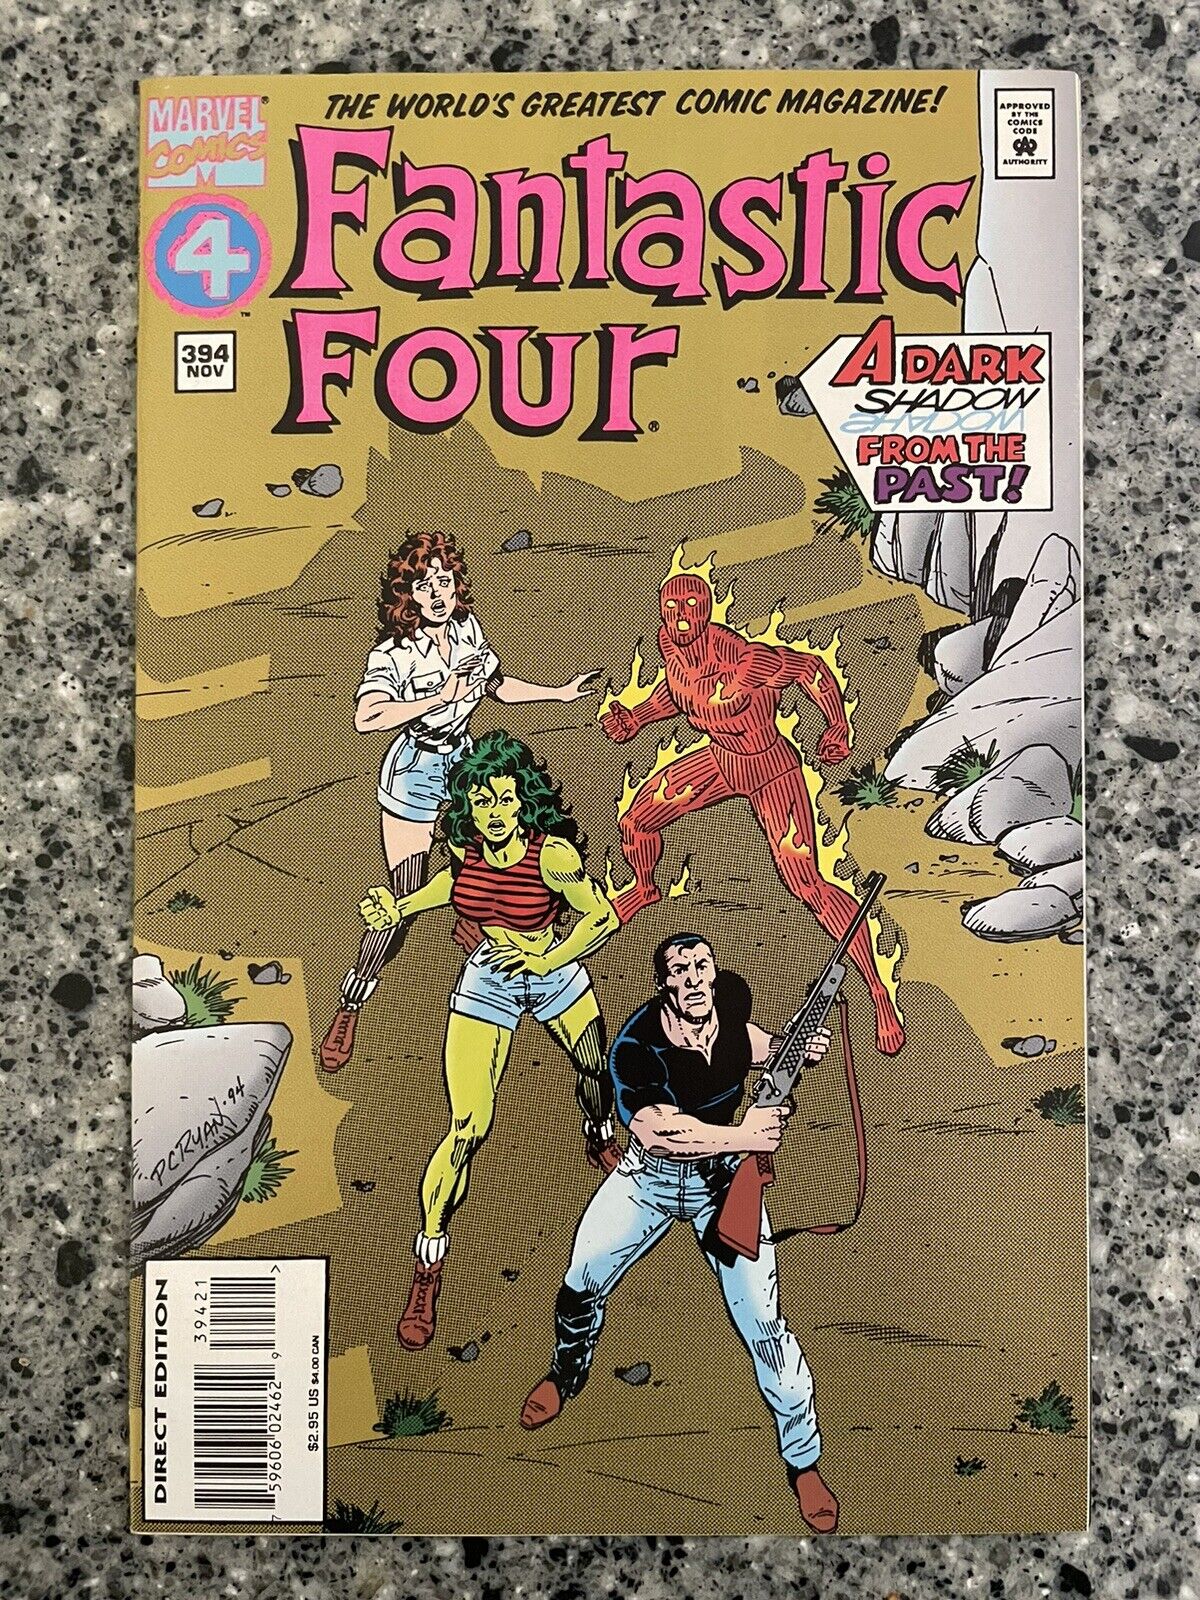 FANTASTIC FOUR #394 VF+ (Marvel 1994) 1st Appearance of the Raptor